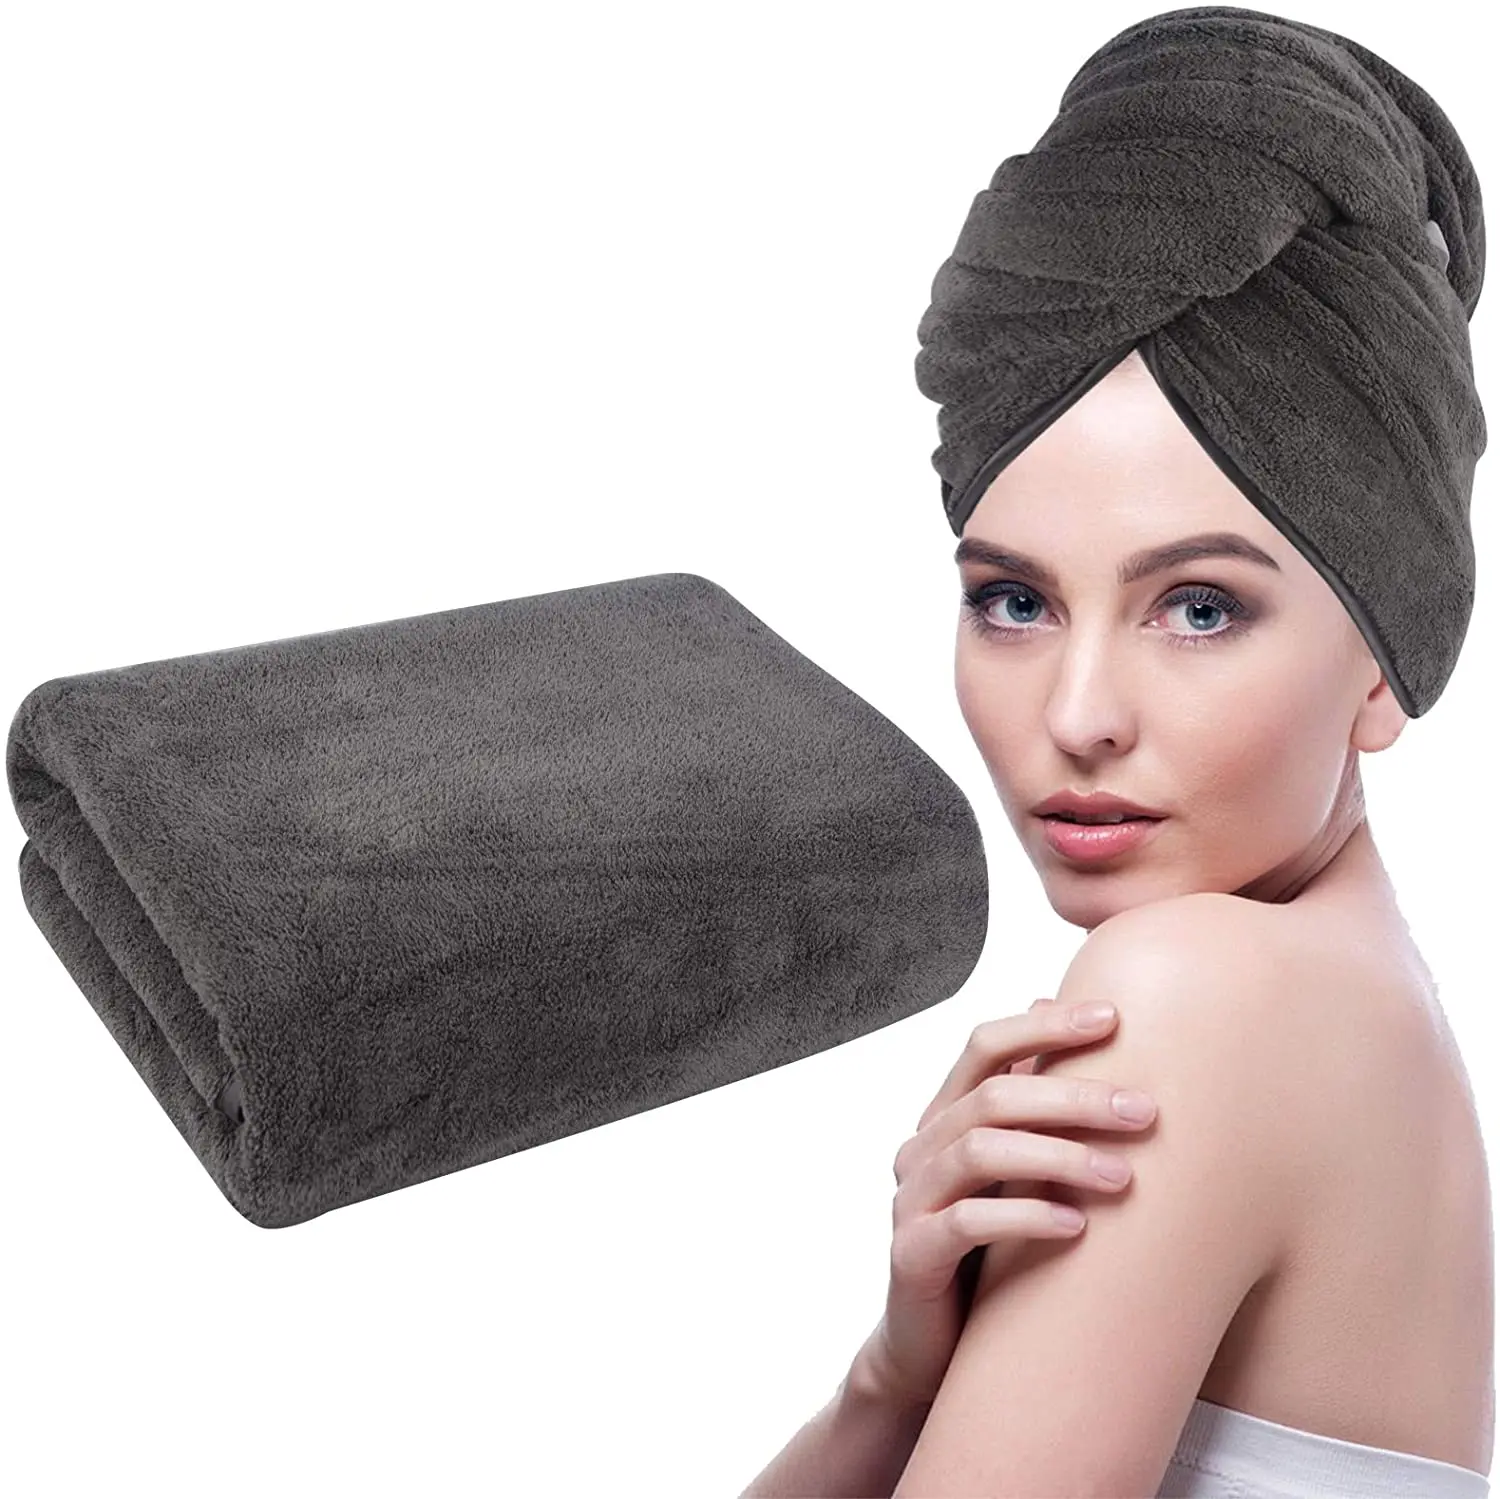 Sinland Super Absorbent Microfiber Hair Drying Bath Towel Wrap Head Towels For Bathroom Spa Women Long Hair 24inx44in 1 Pack